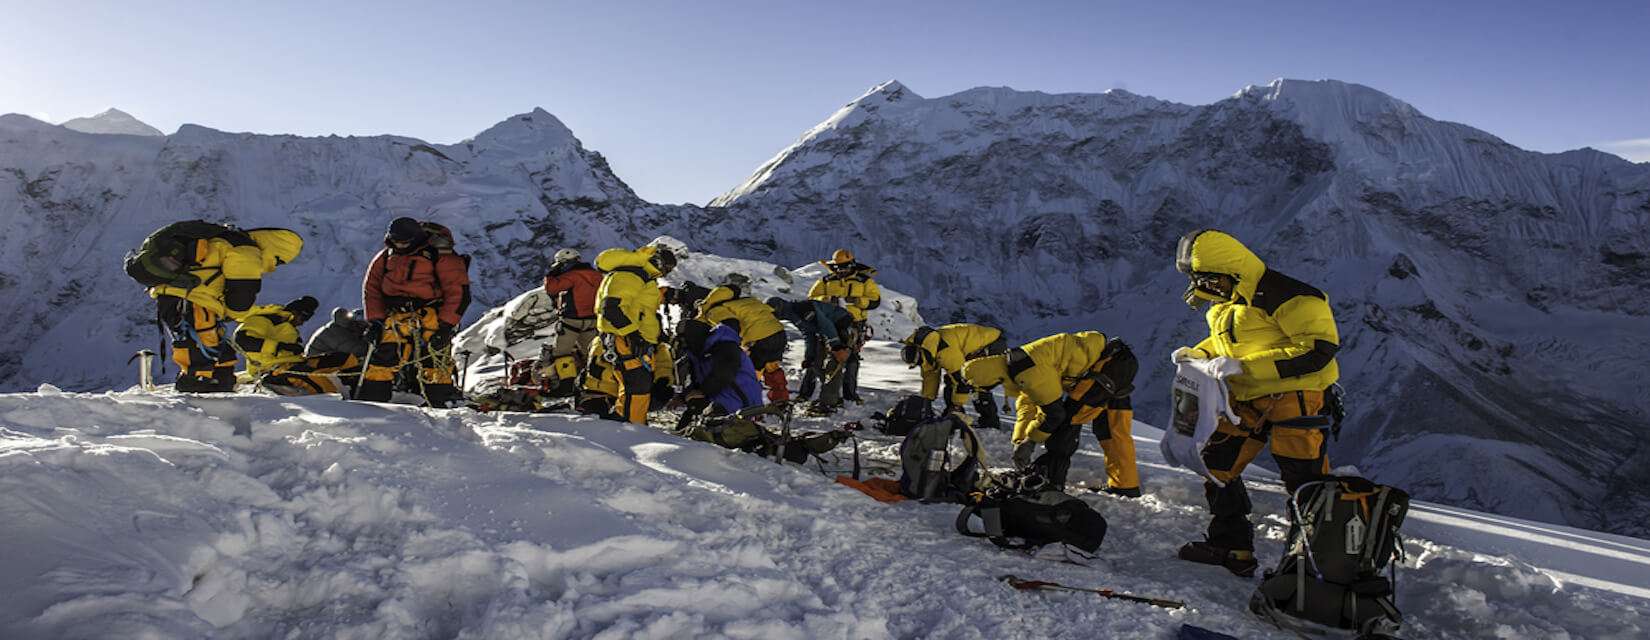 Island peak climbing with Everest base camp trek